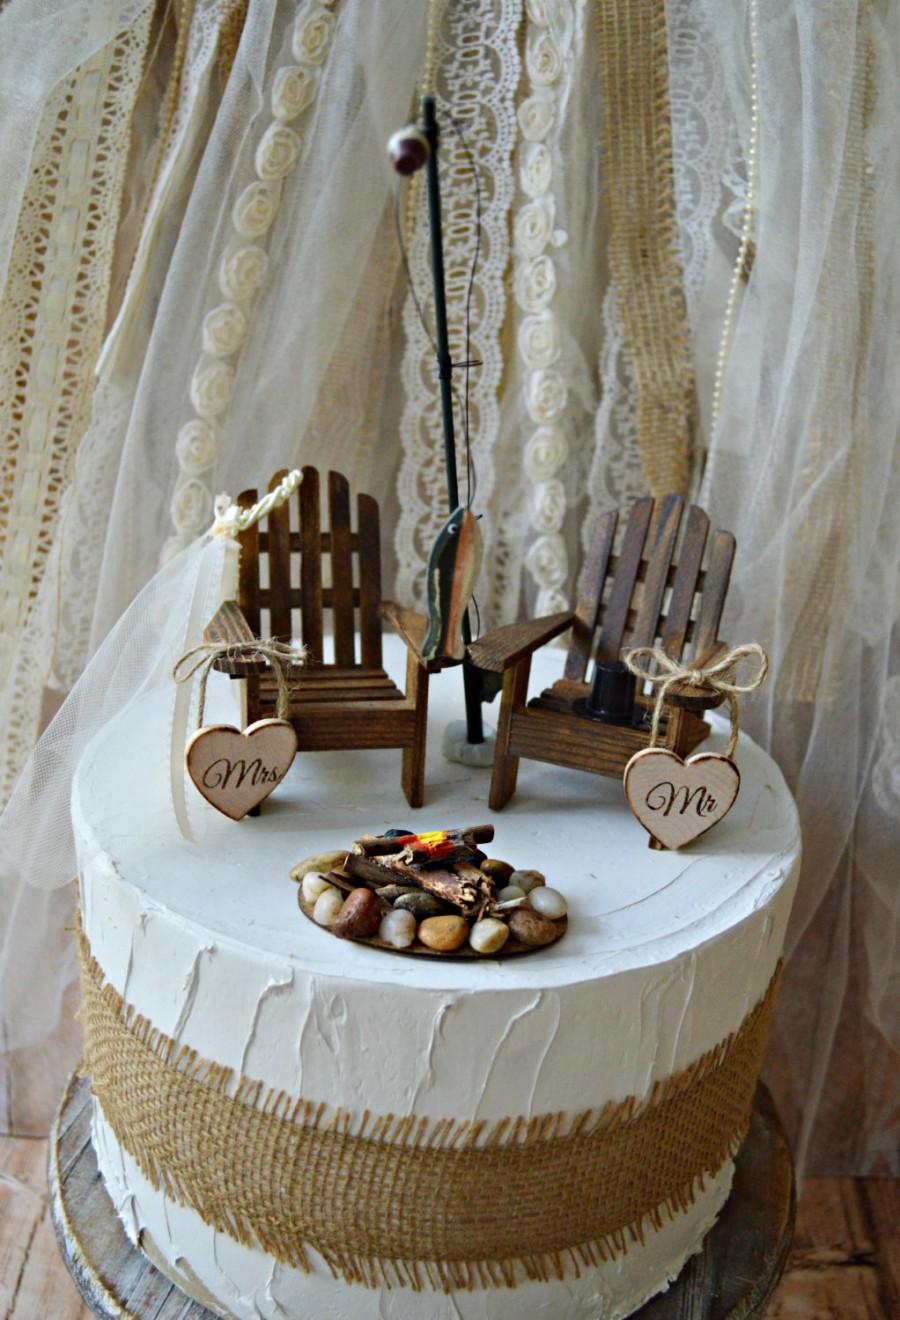 Свадьба - hunting-camping-fishing-outdoors-wedding-cake topper-fishing groom-lake house-themed-wood chairs-bride and groom-camp fire-fishing pole